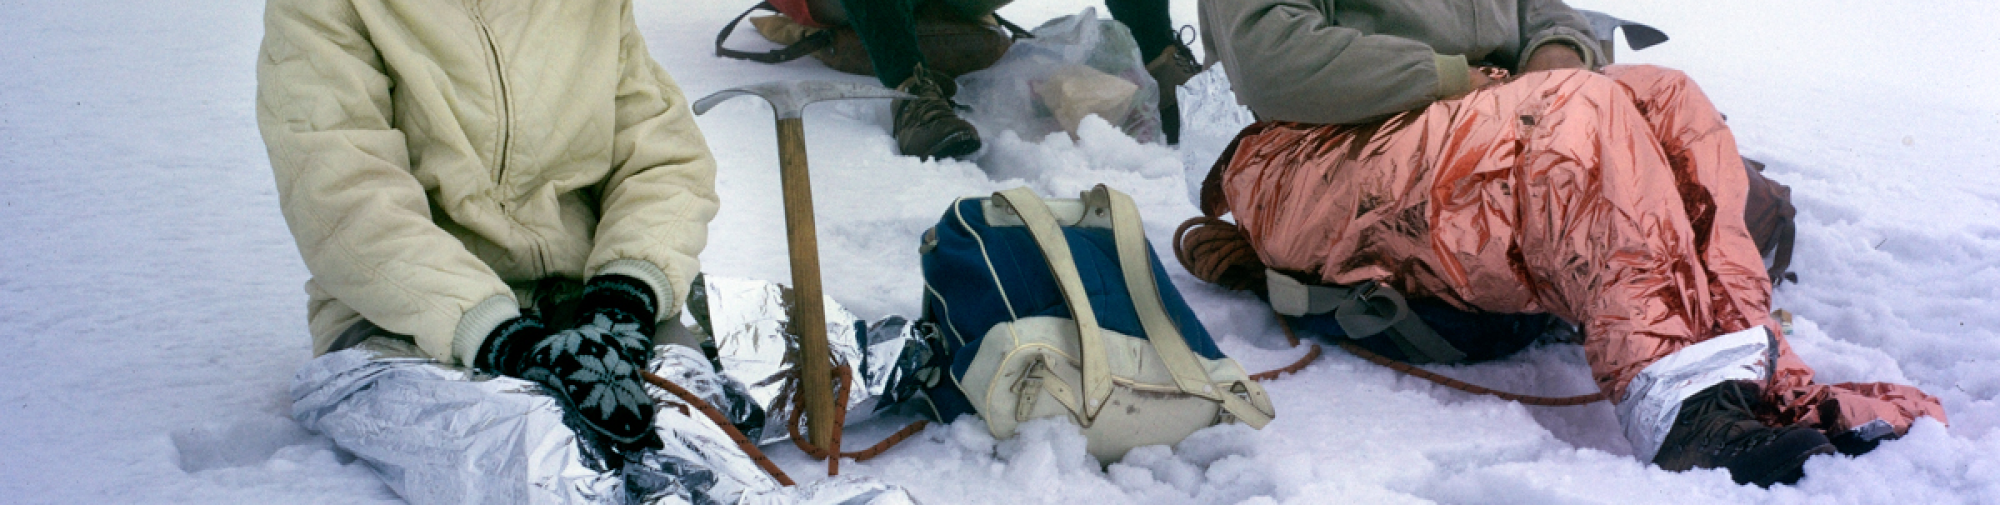 Legs wrapped in foil, the rope team rests in the snow Switzerland, 1966 Photographer: Dölf Reist © Alpines Museum der Schweiz